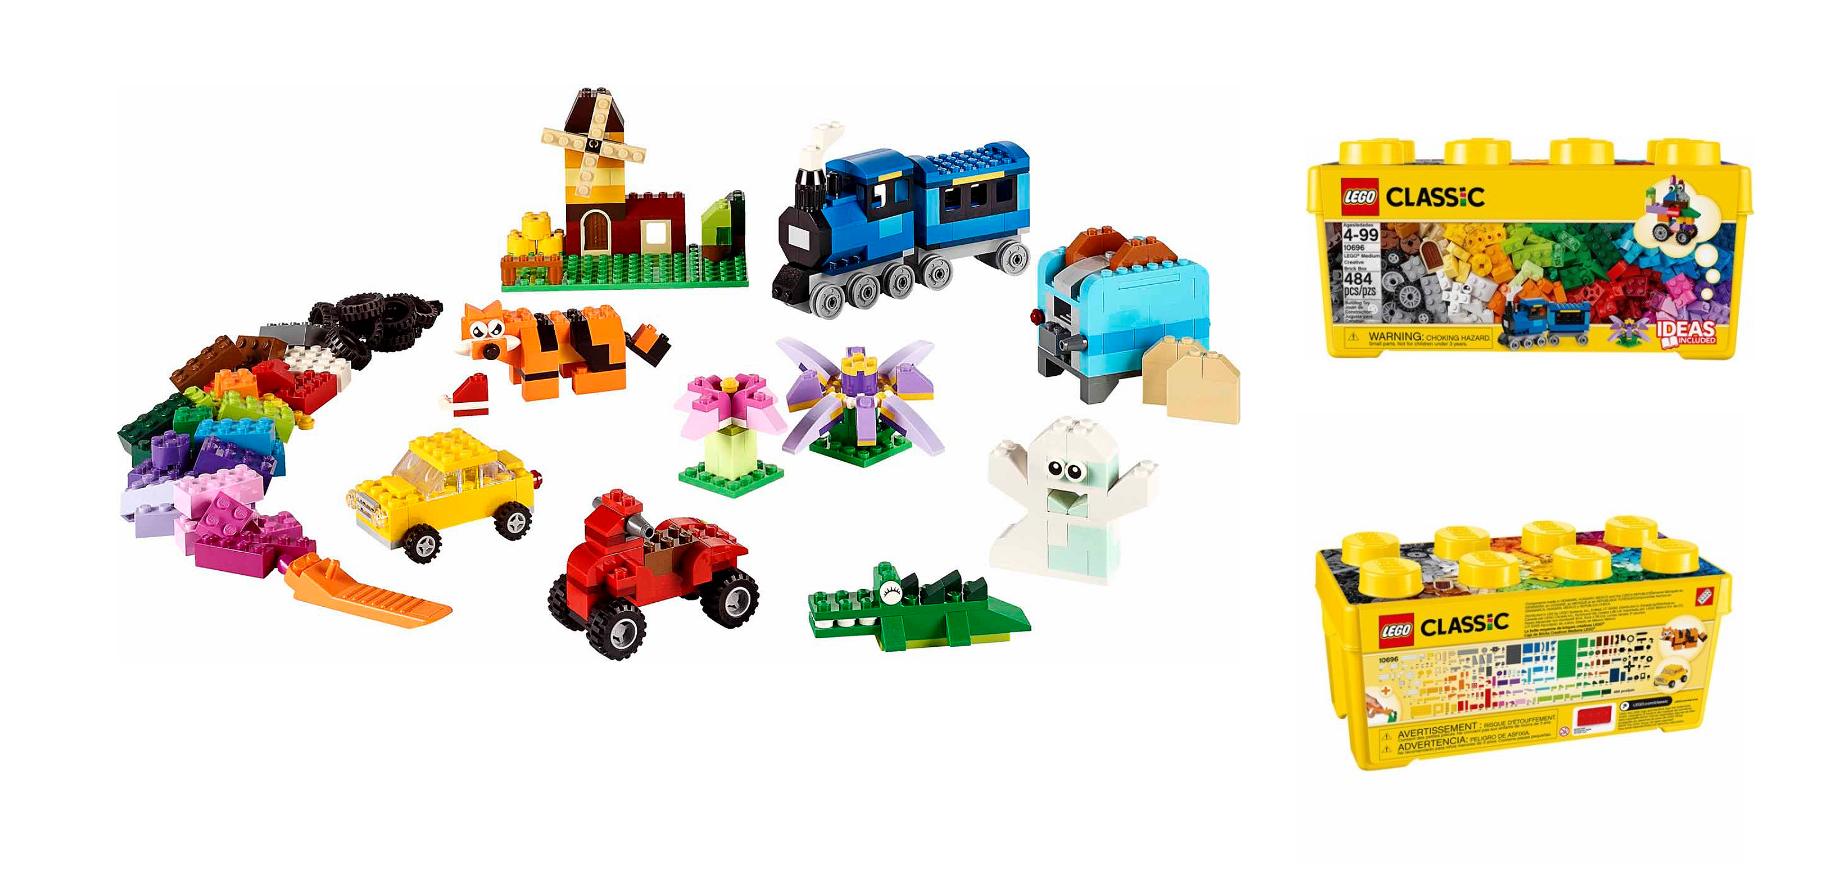 LEGO Classic Medium Creative Brick Box—$27.99 (Reg $39.99)